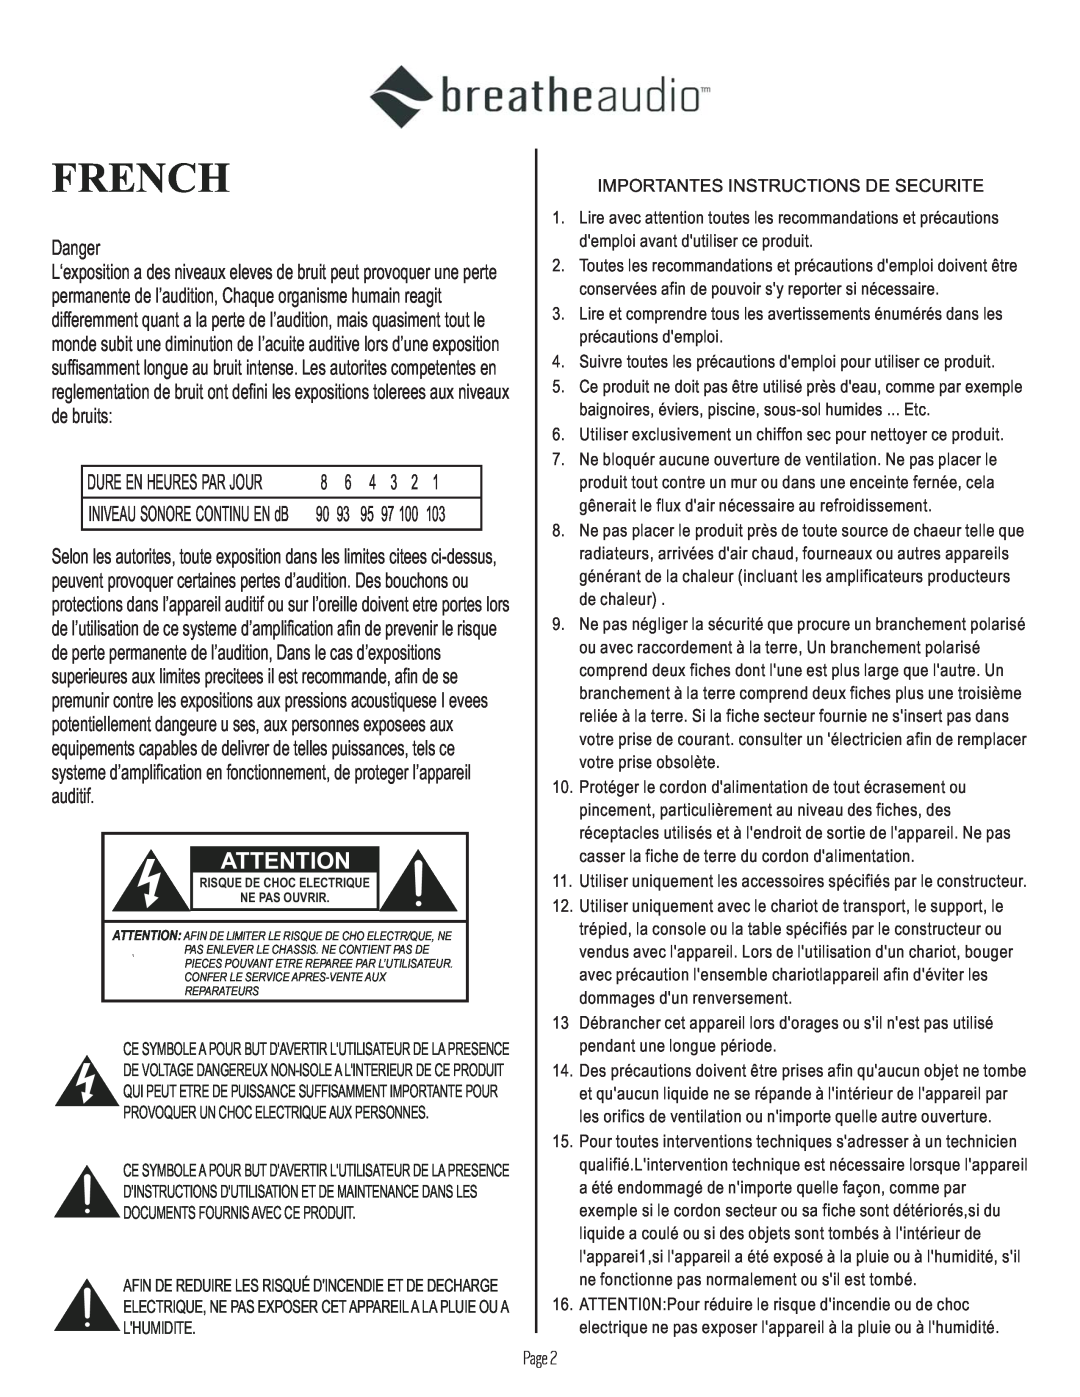 BreatheAudio BA-200 owner manual French, Danger 